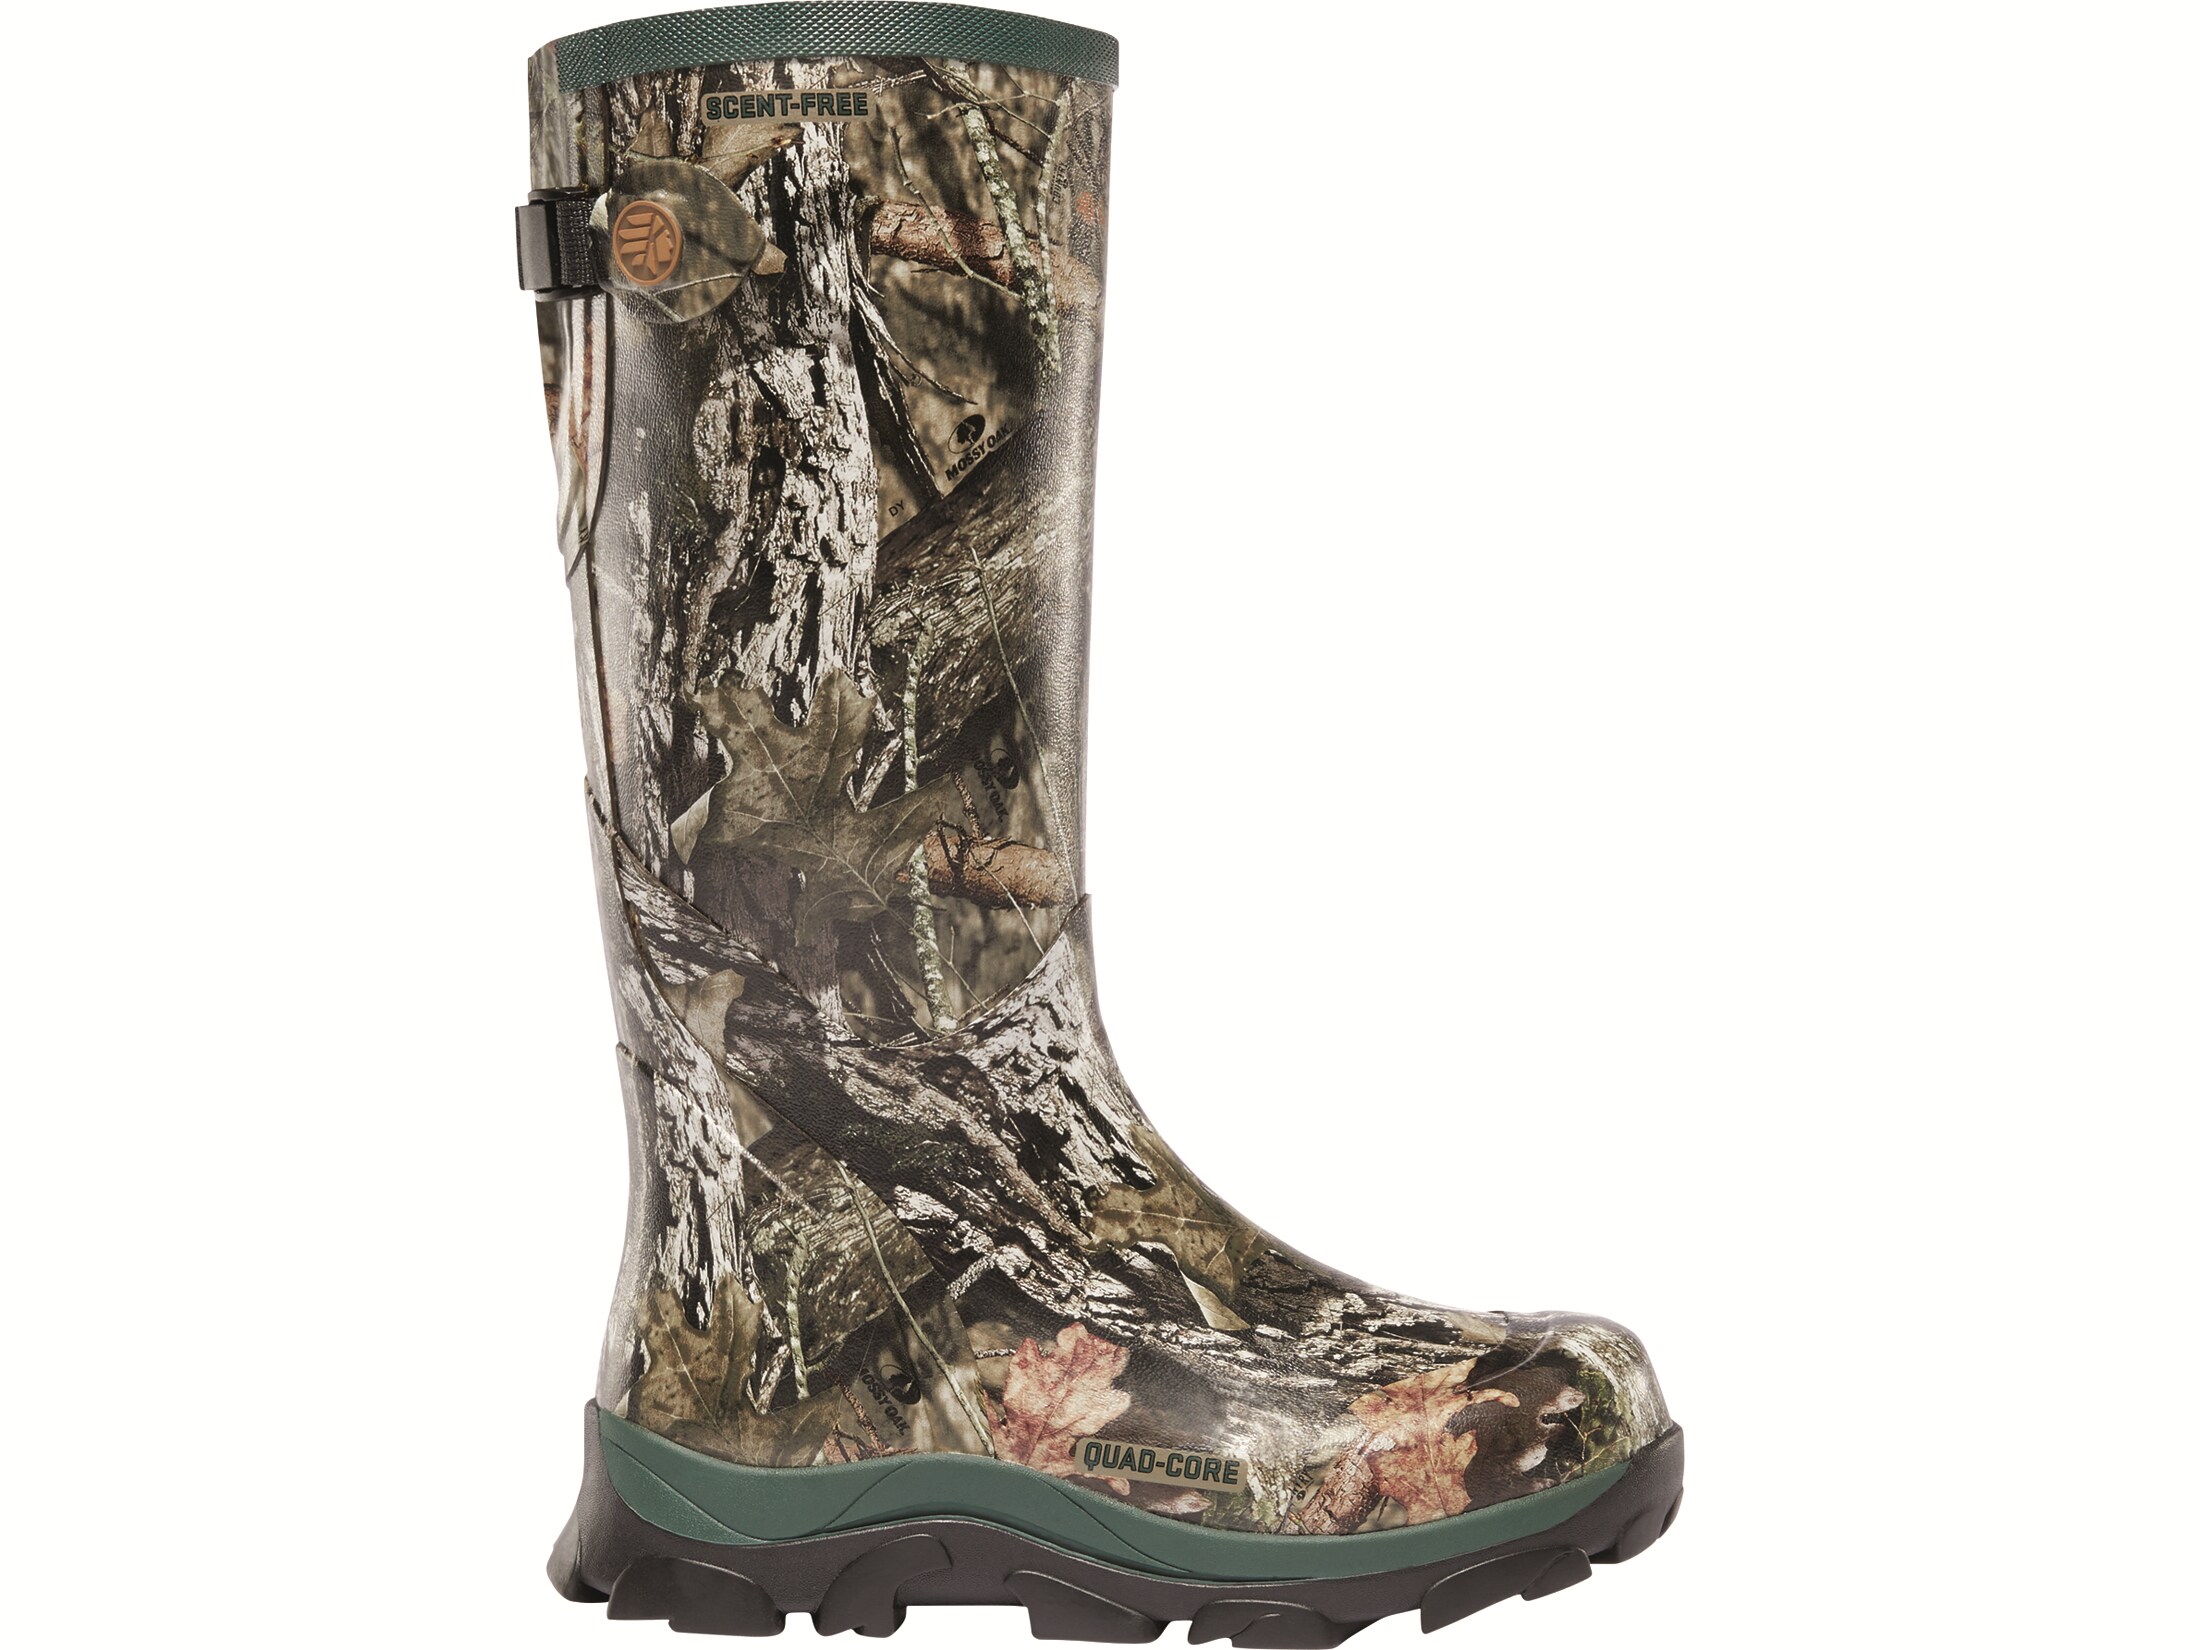 LaCrosse Switchgrass 15 Hunting Boots Rubber Clad Neoprene Mossy Oak